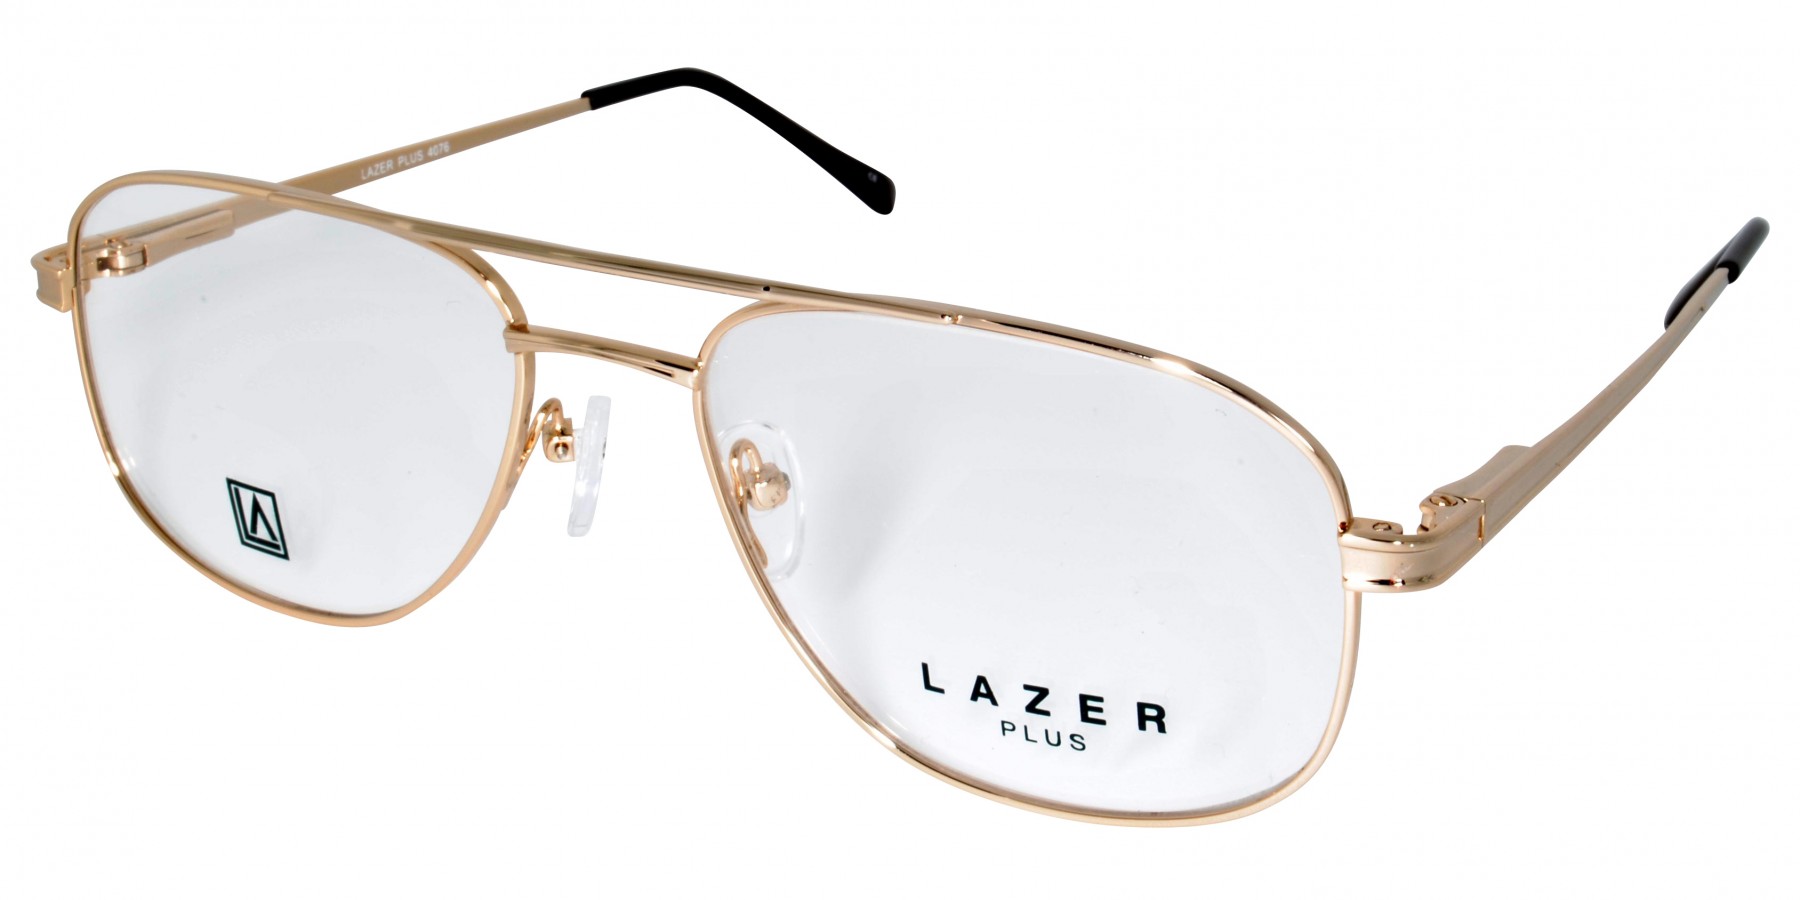 Lazer 4076 Prescription Glasses